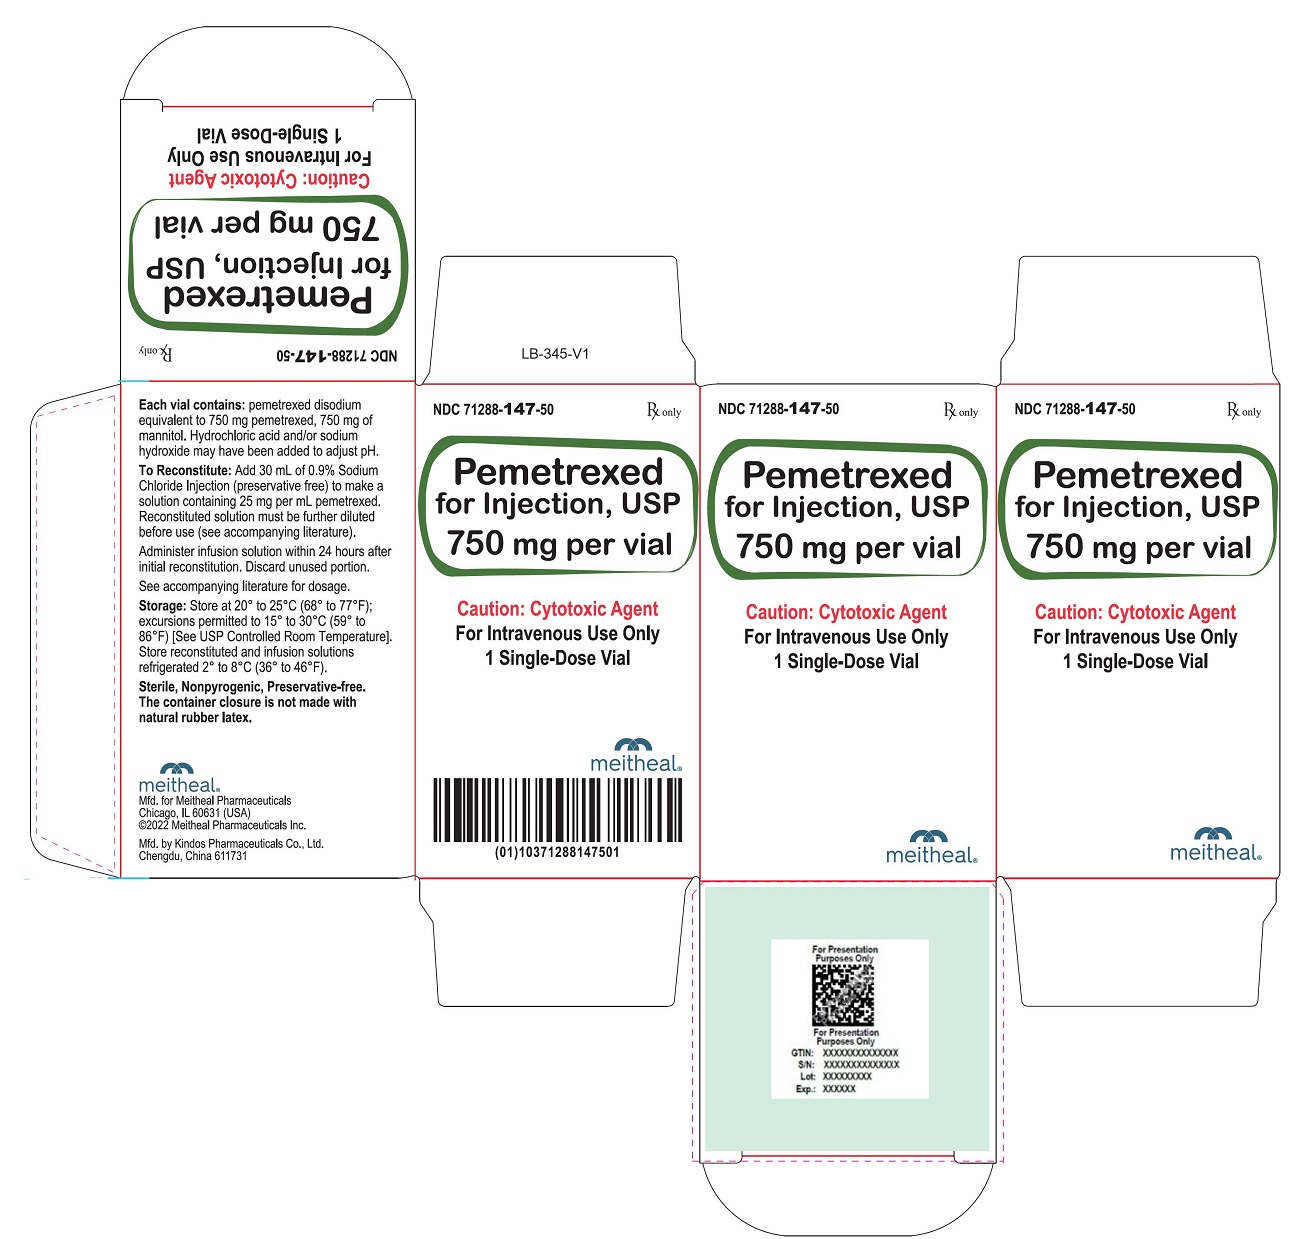 PRINCIPAL DISPLAY PANEL – Pemetrexed for Injection, USP 750 mg Carton